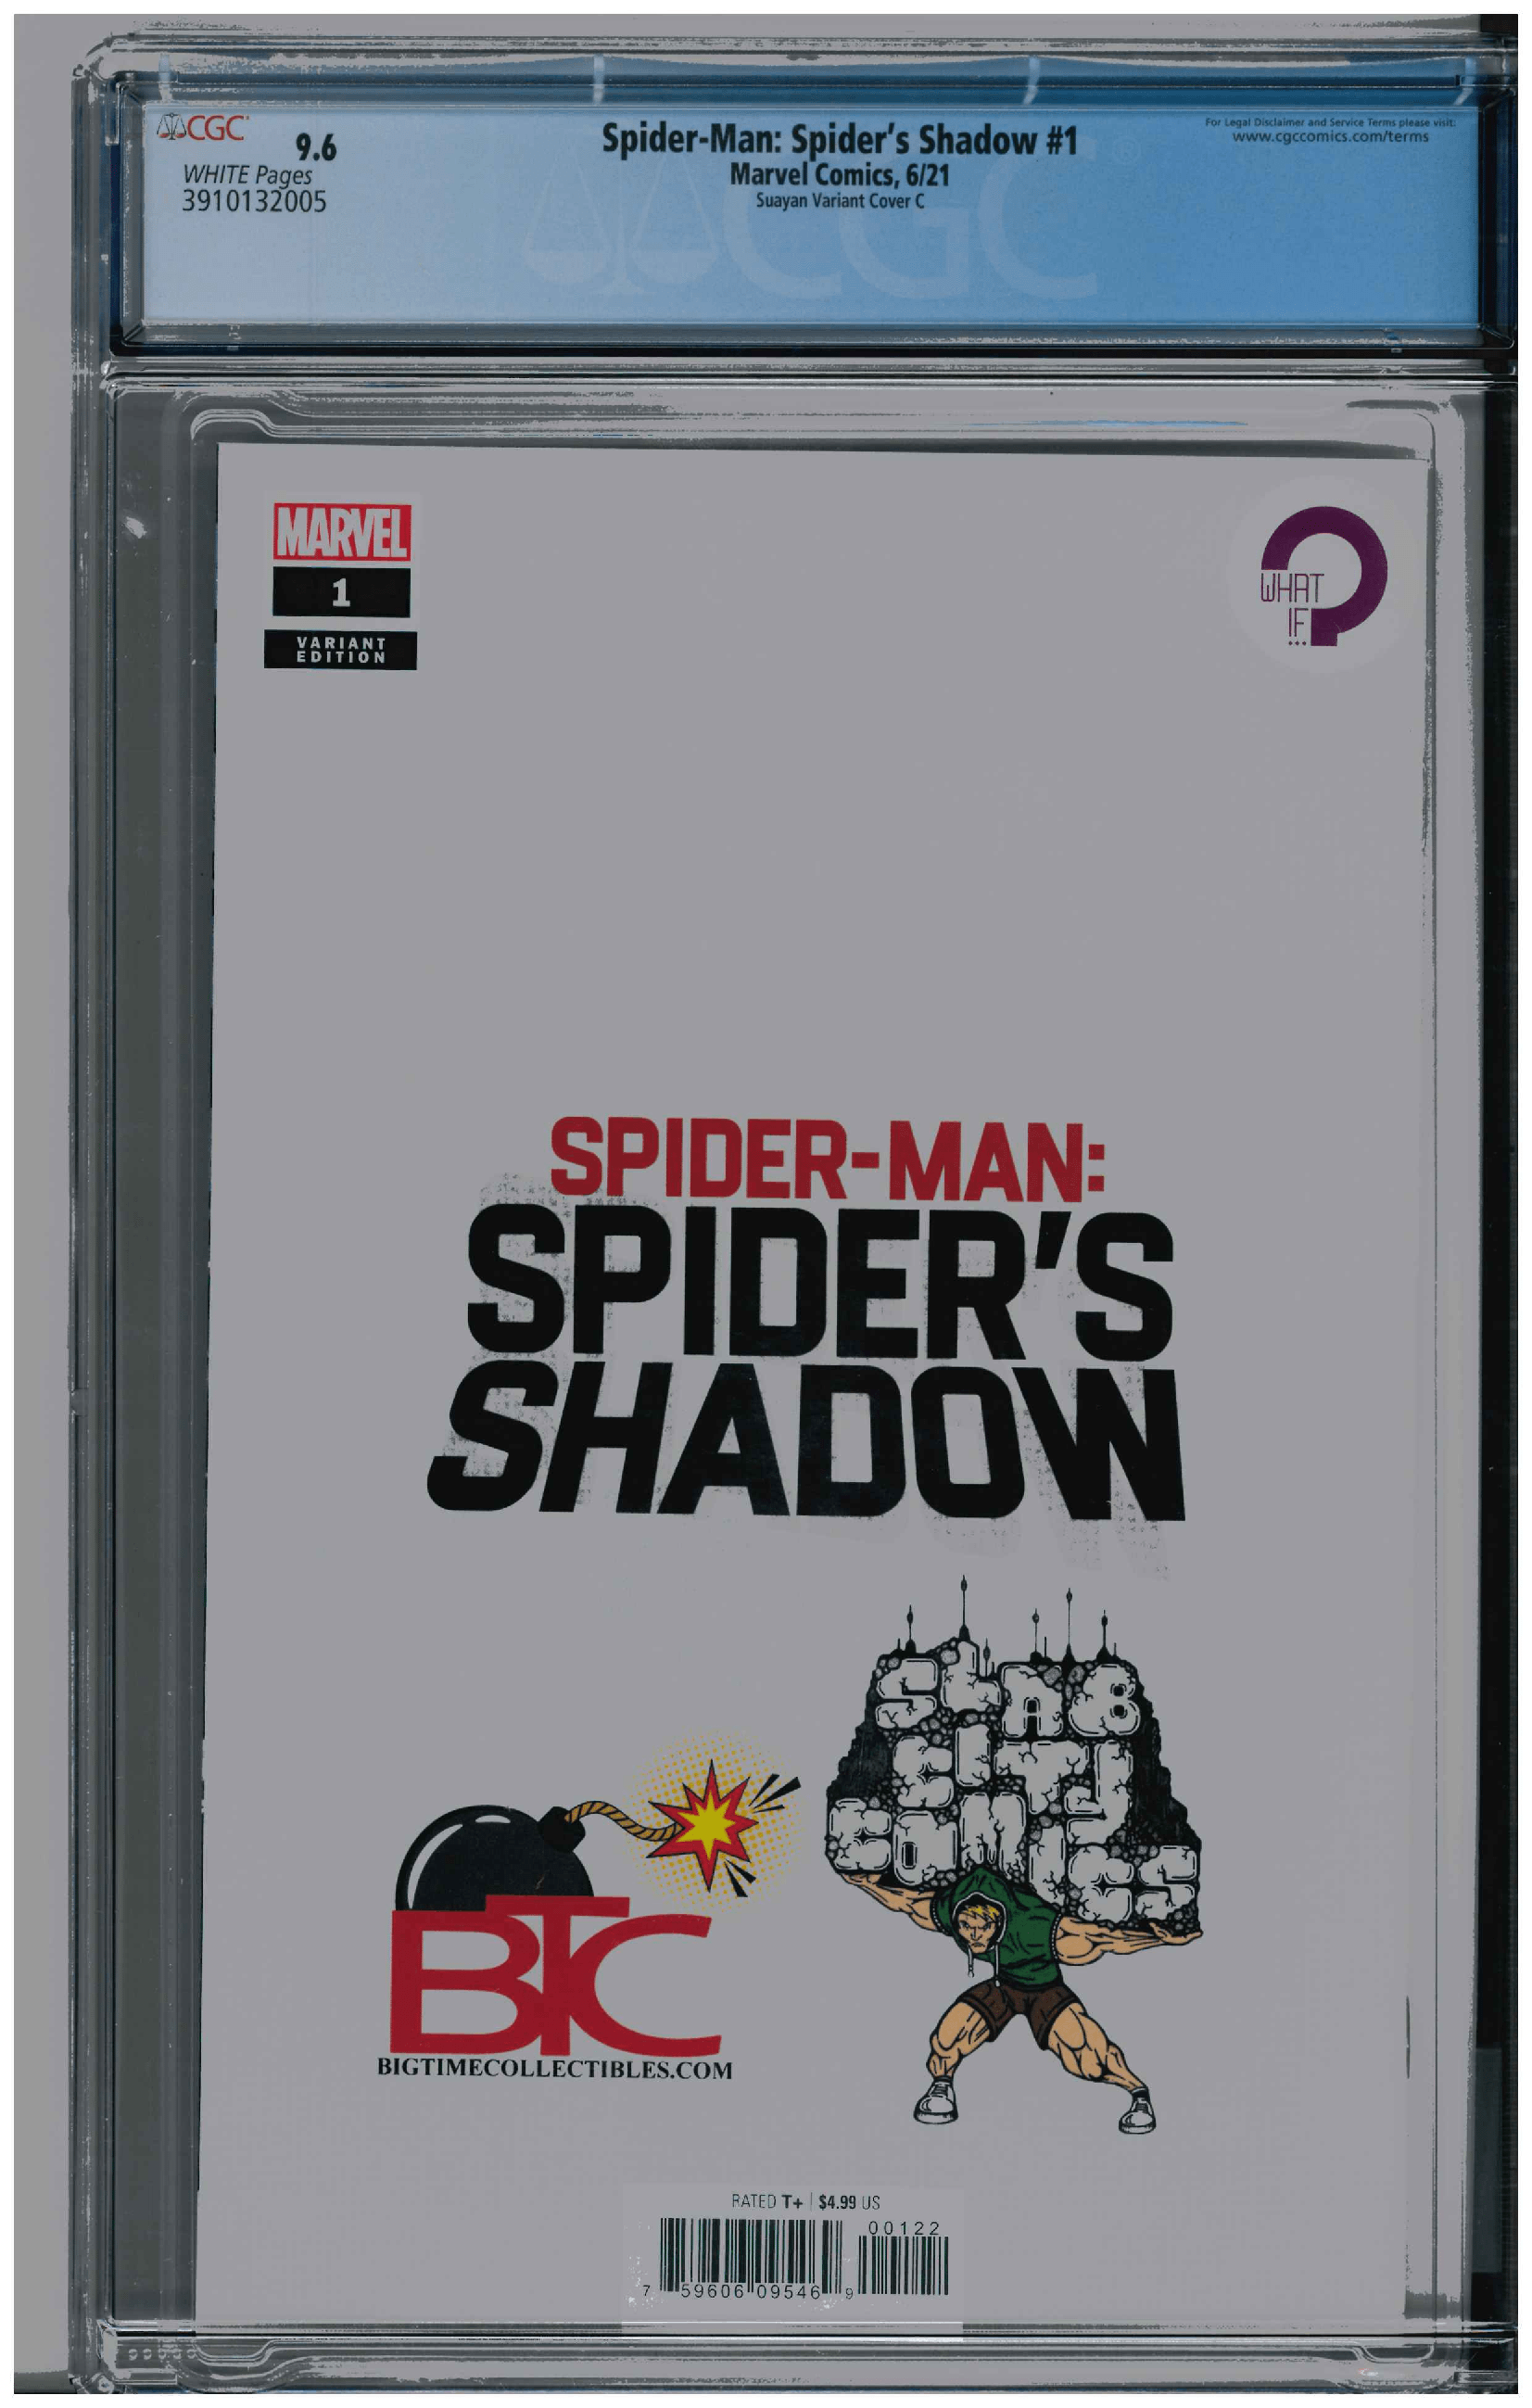 Spider-Man: Spider's Shadow #1 backside